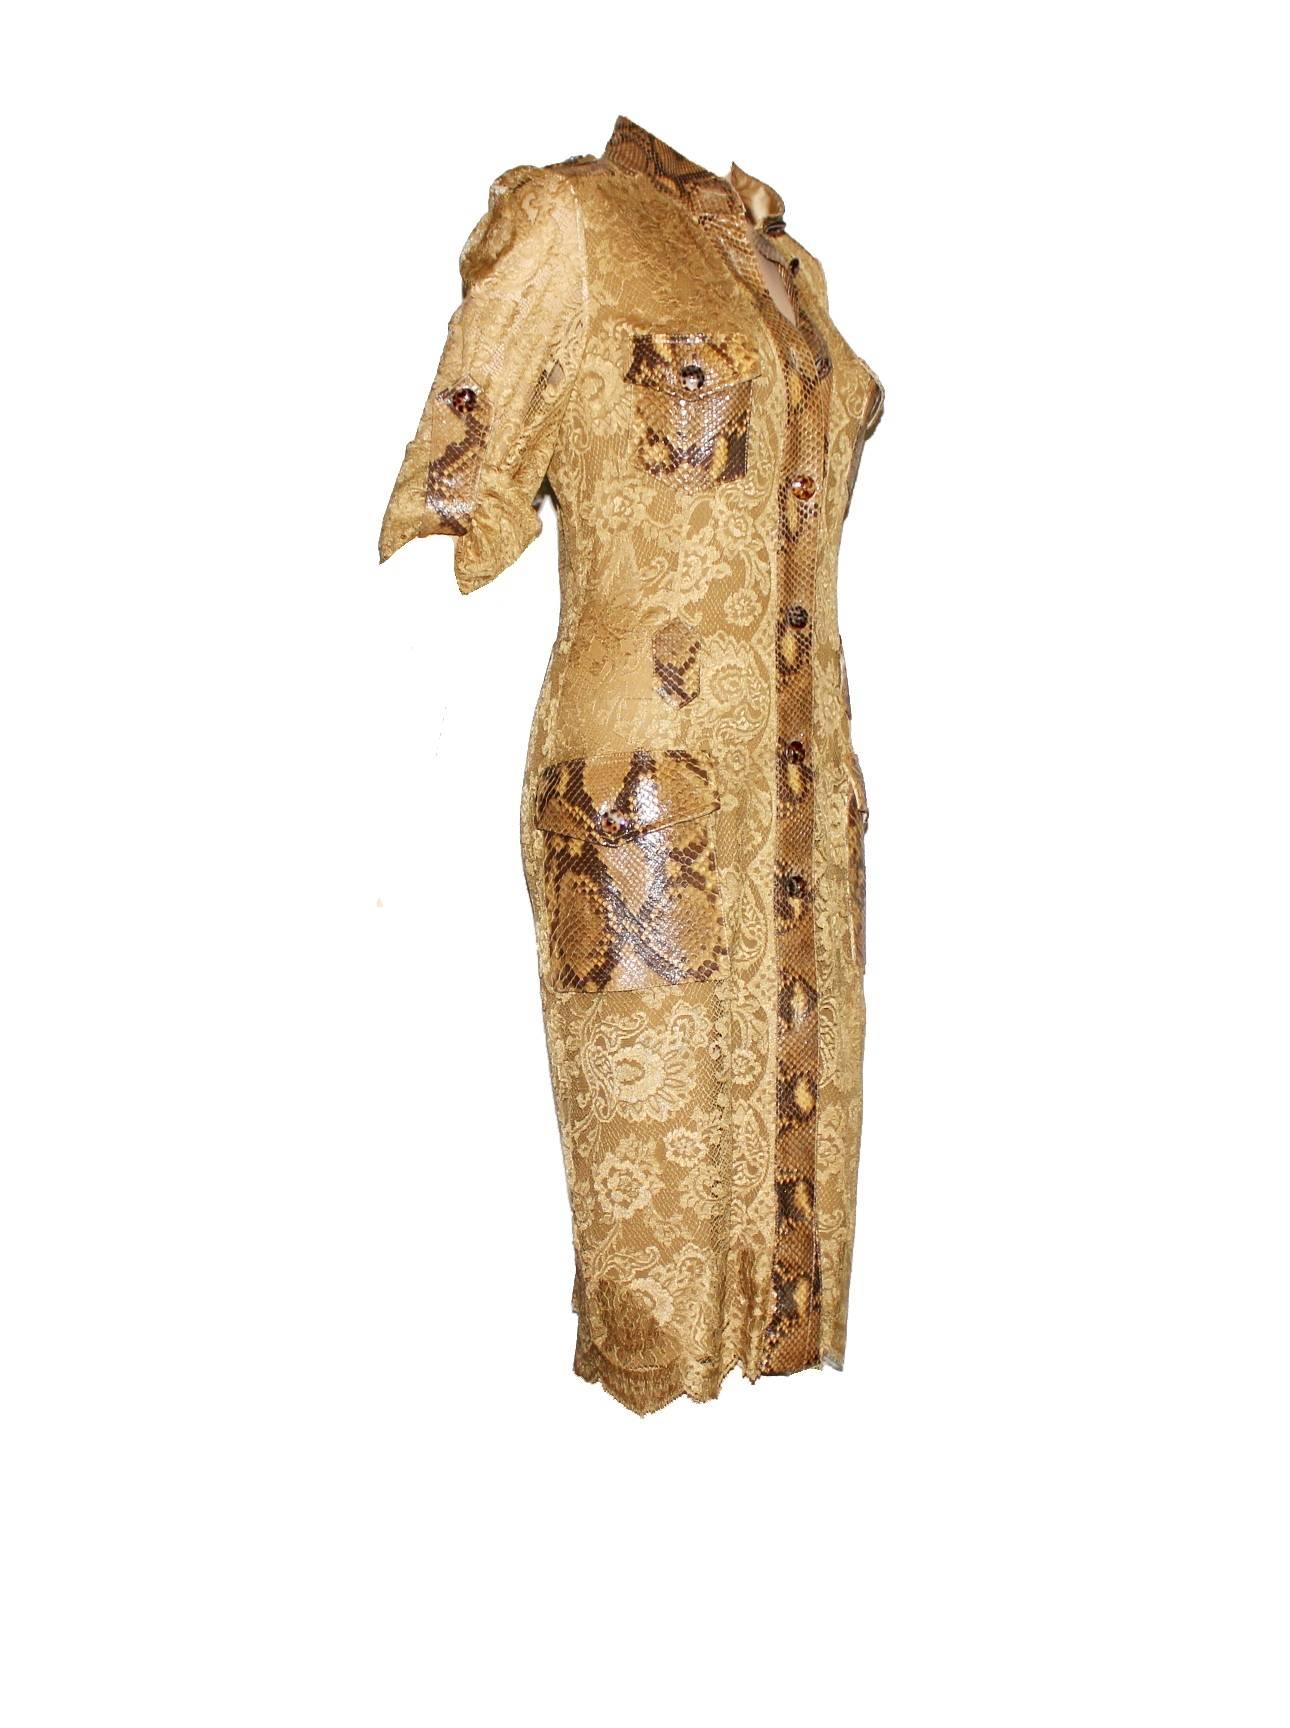 Brown Unique Dolce & Gabbana Python Snakeskin Lace Tortoise Dress Gown